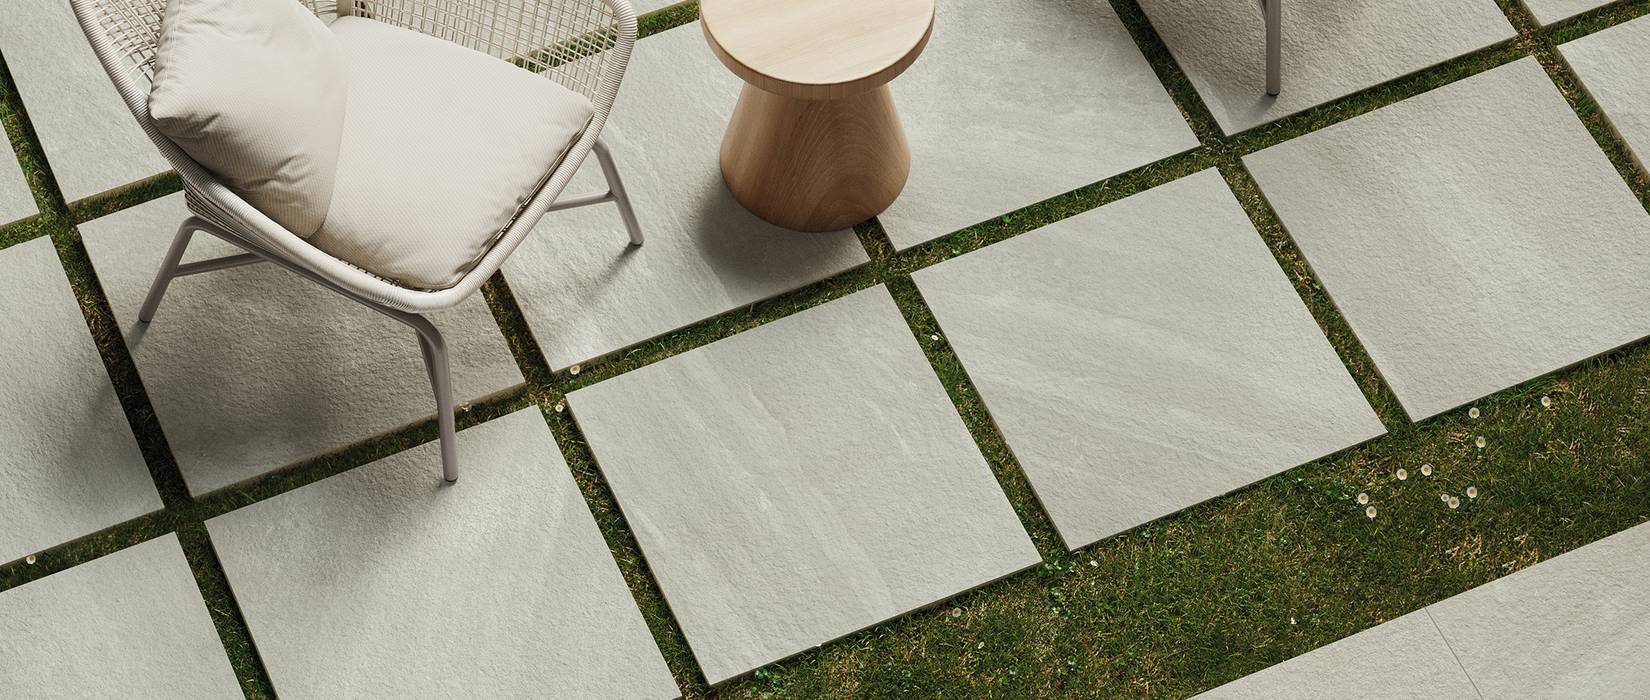 Stone effect outdoor flooring